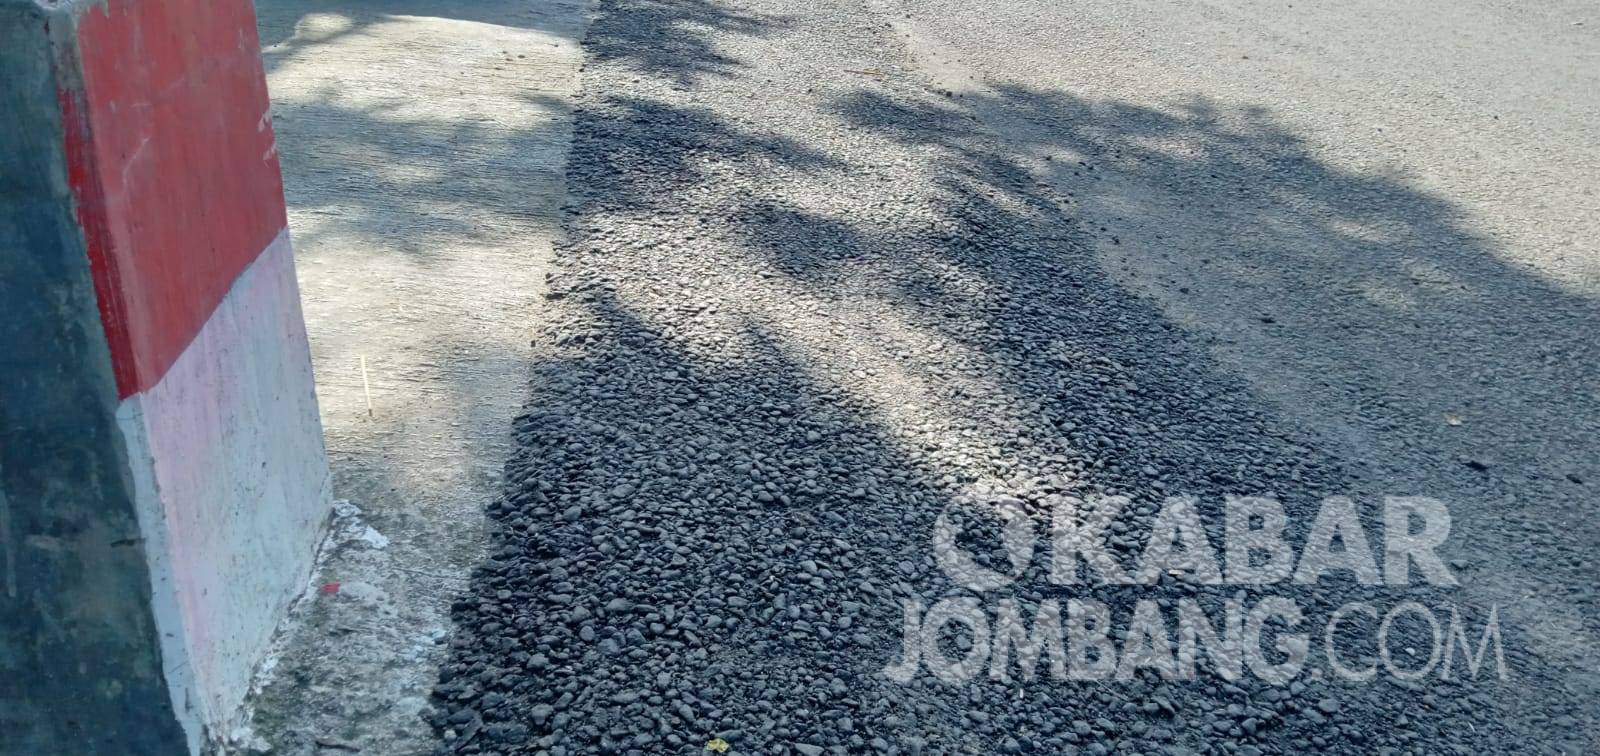 Kualitas proyek pengaspalan jalan di Desa Kepuhkajang, Kecamatan Perak, Kabupaten Jombang, yang menelan anggaran ratusan juta dikeluhkan masyarakat. KabarJombang.com/M Faiz H/